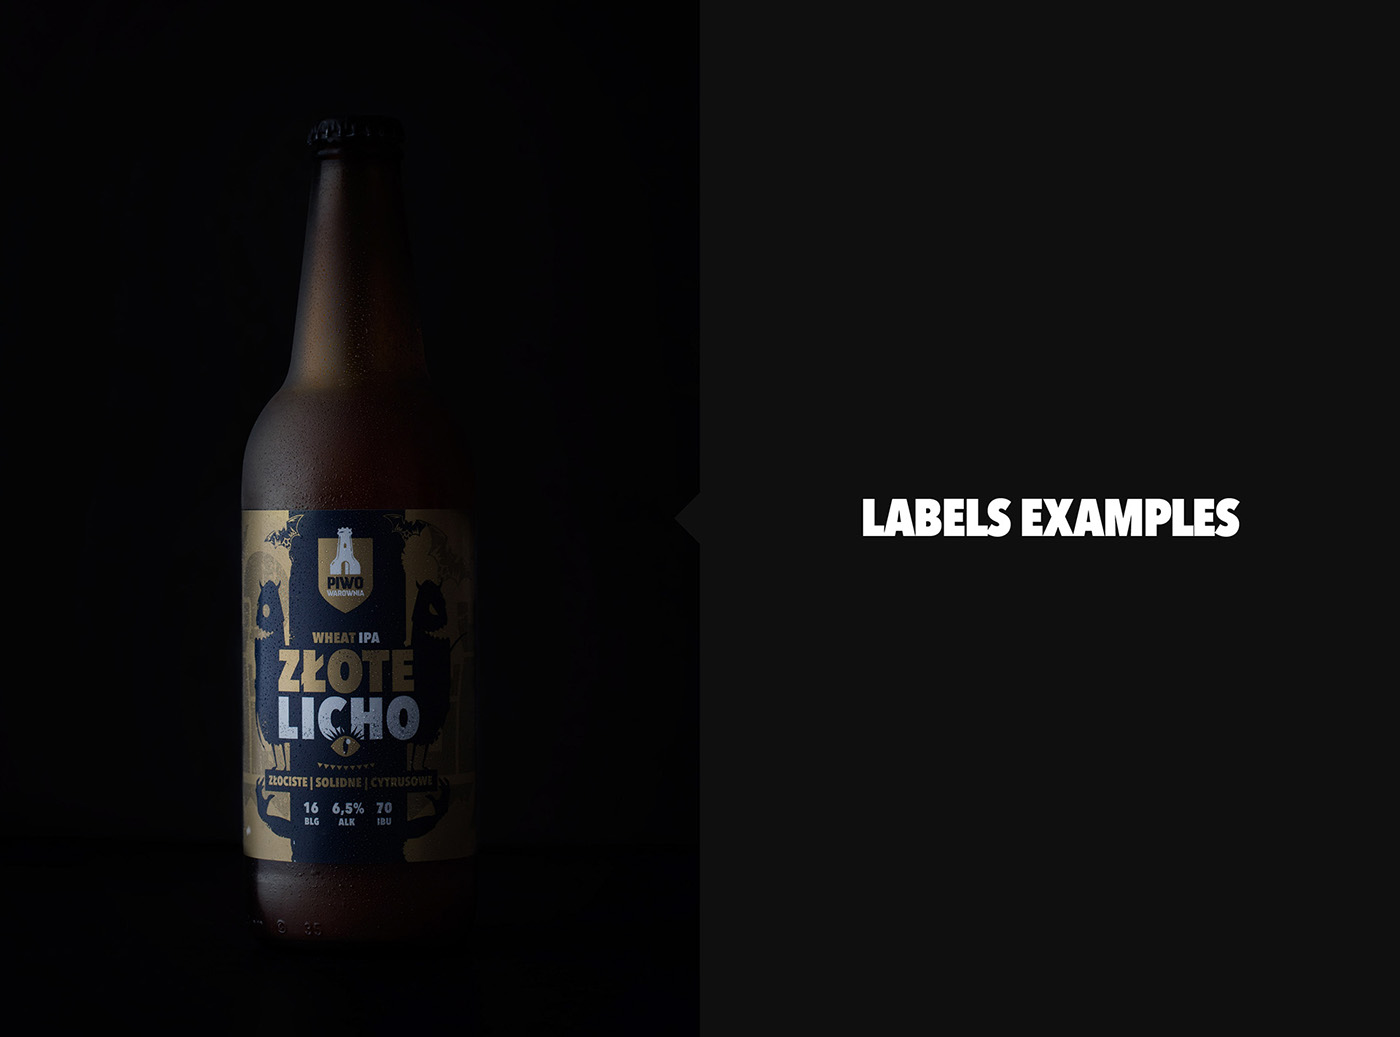 branding  rebranding beer label design Logotype beer labels logo Logo Design